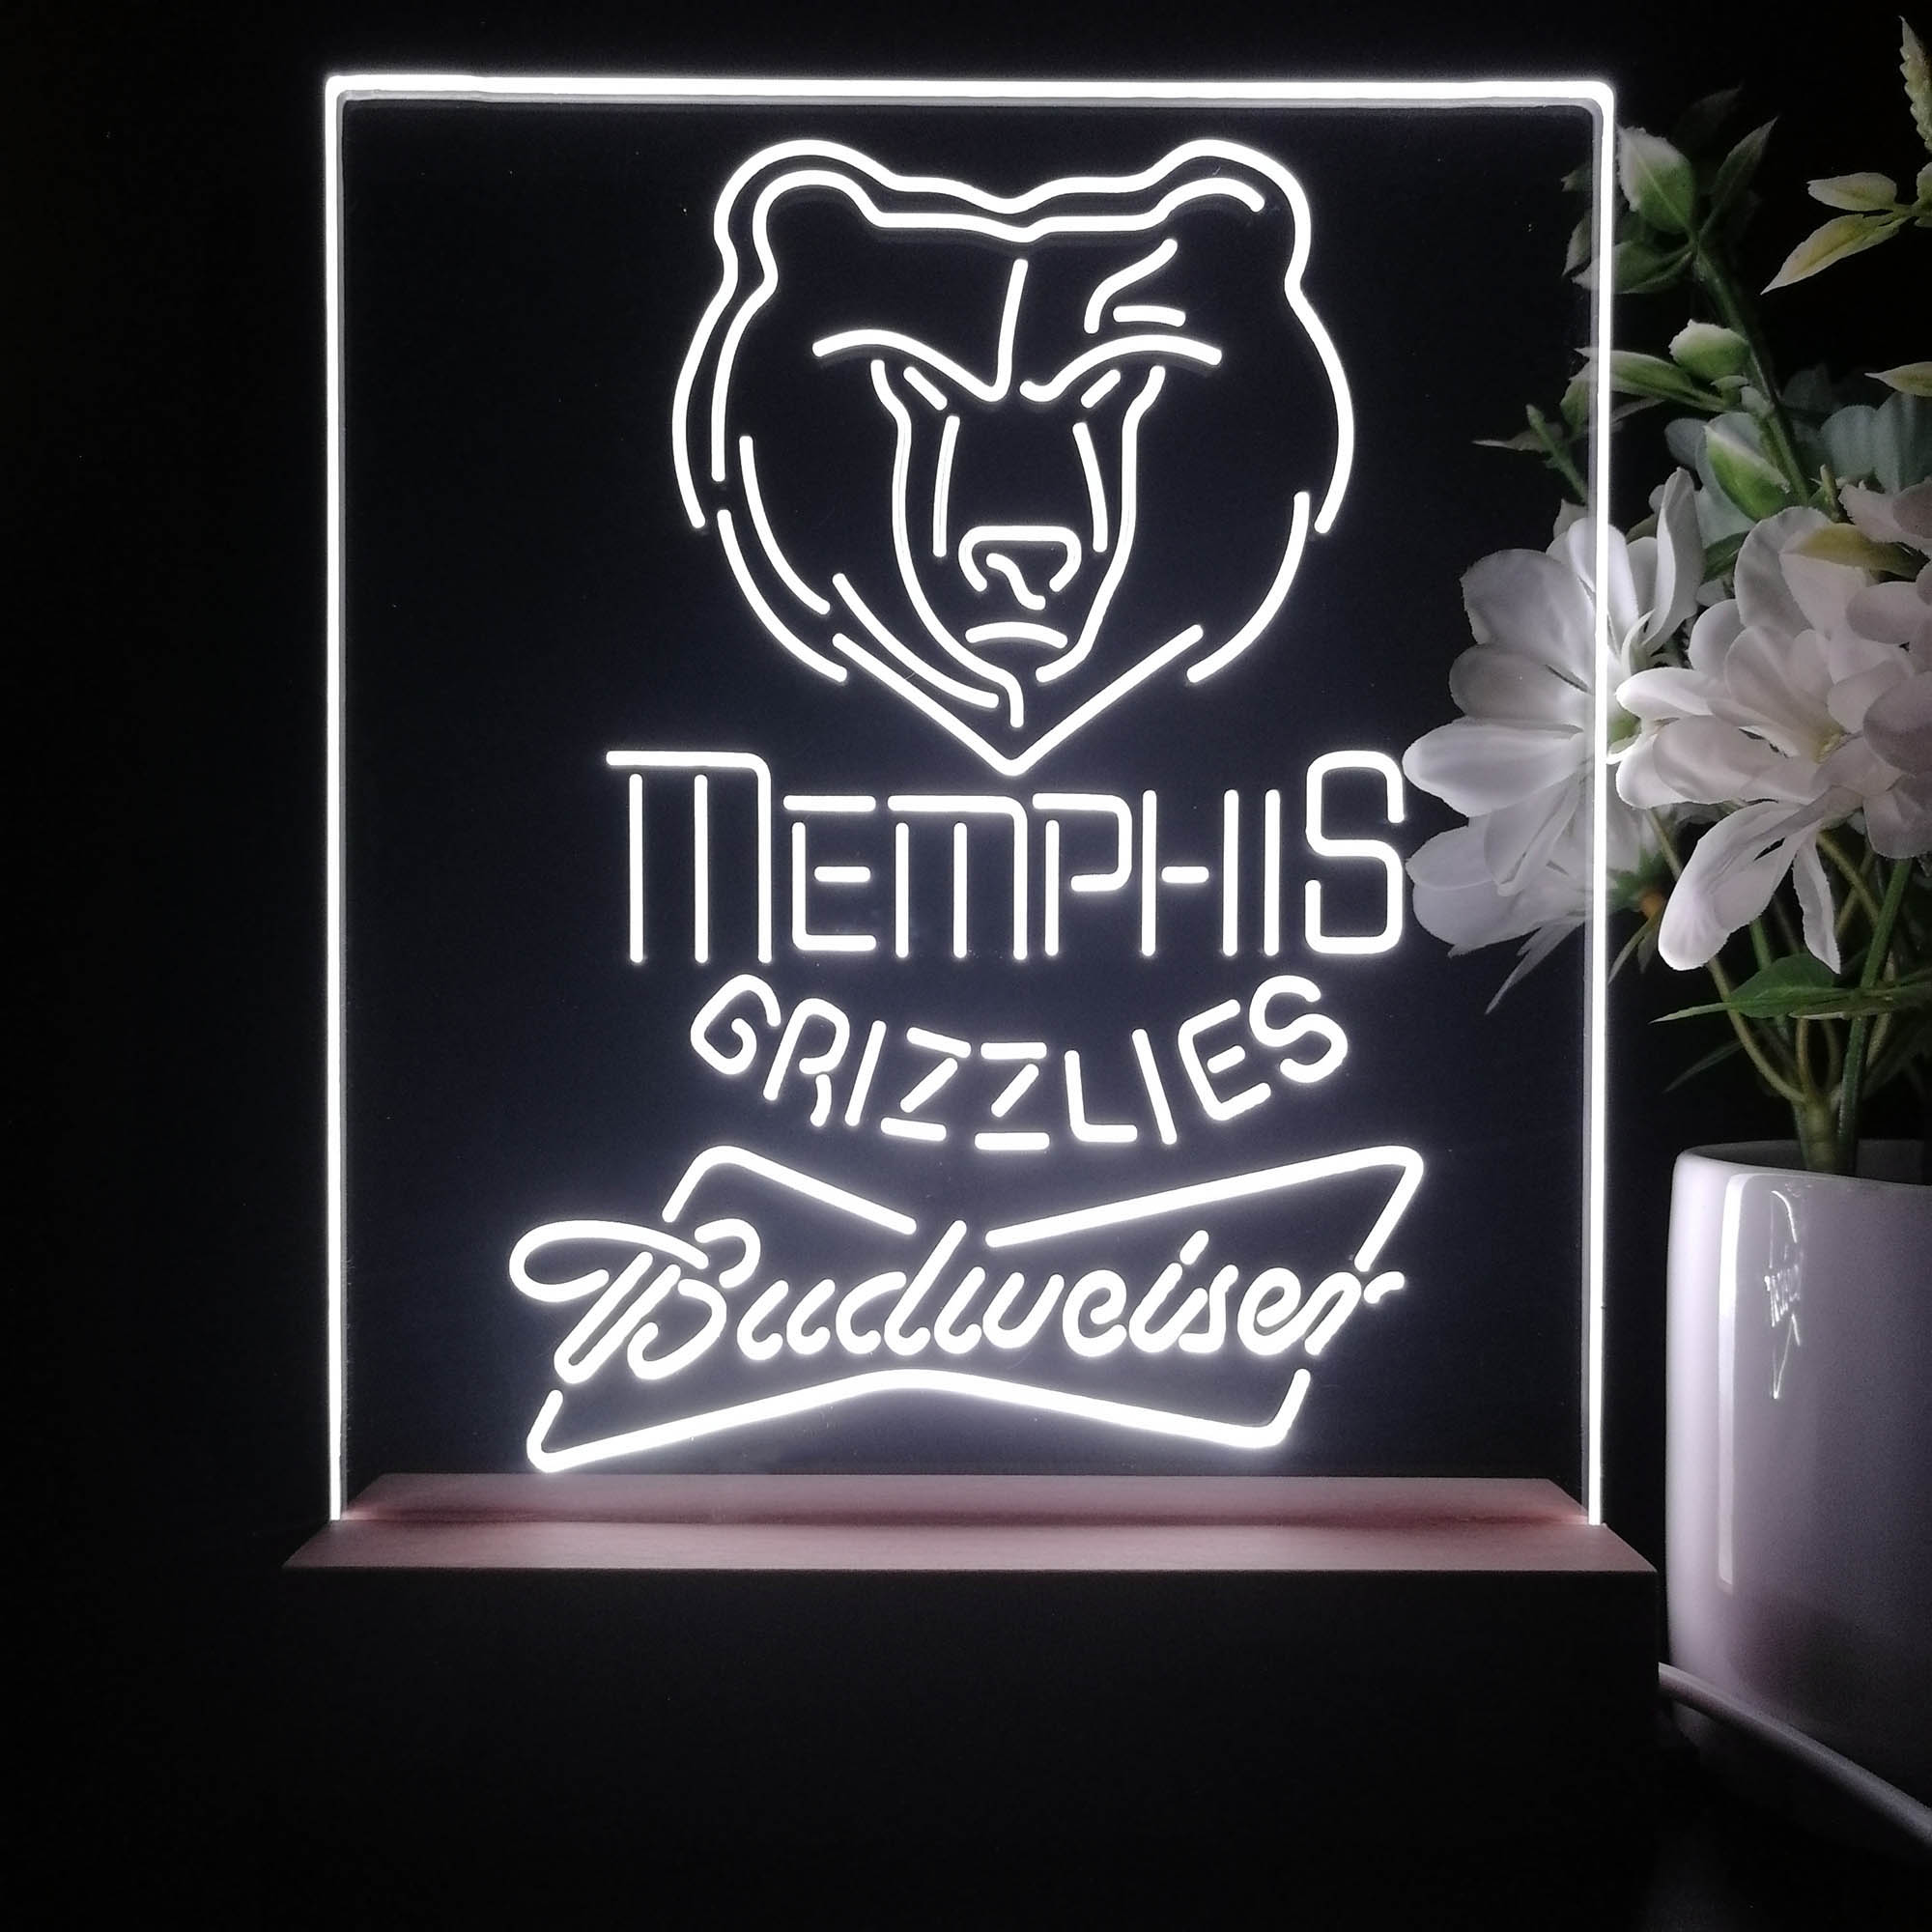 Memphis Grizzlies Budweiser Neon Sign Pub Bar Lamp